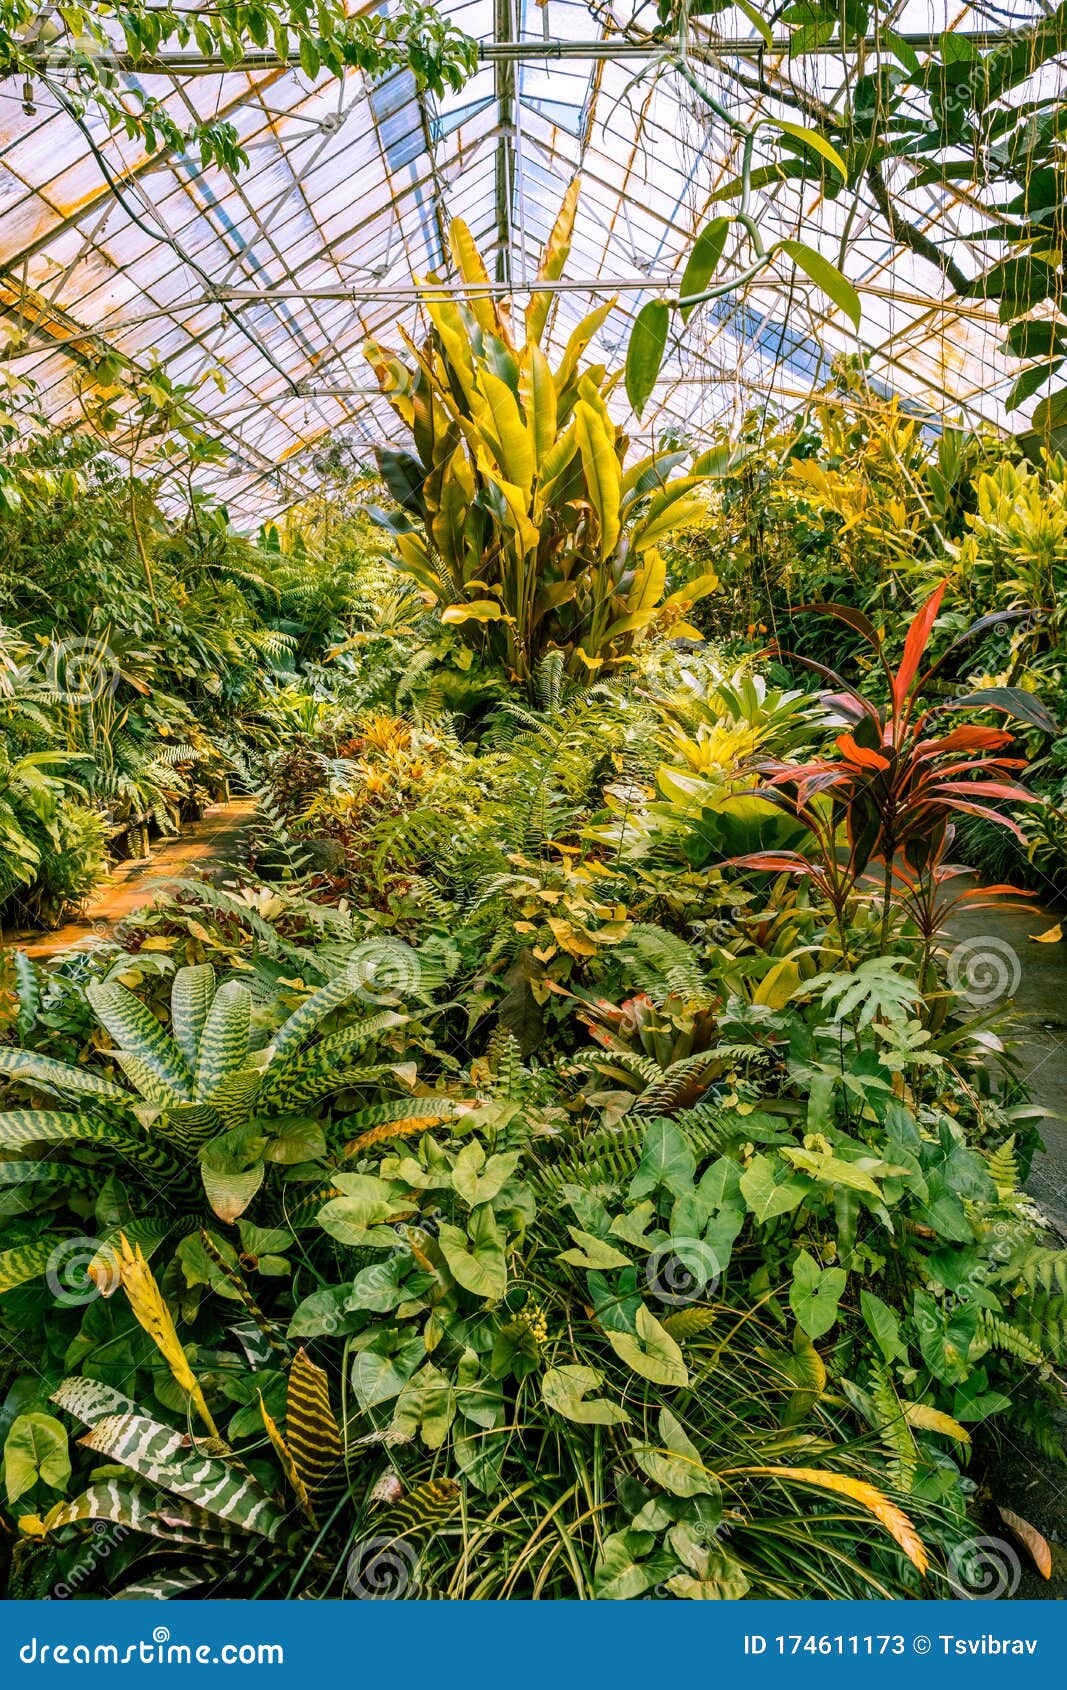 Lush Green Vegetation in Tropical Glasshouse. Stock Image - Image of ...